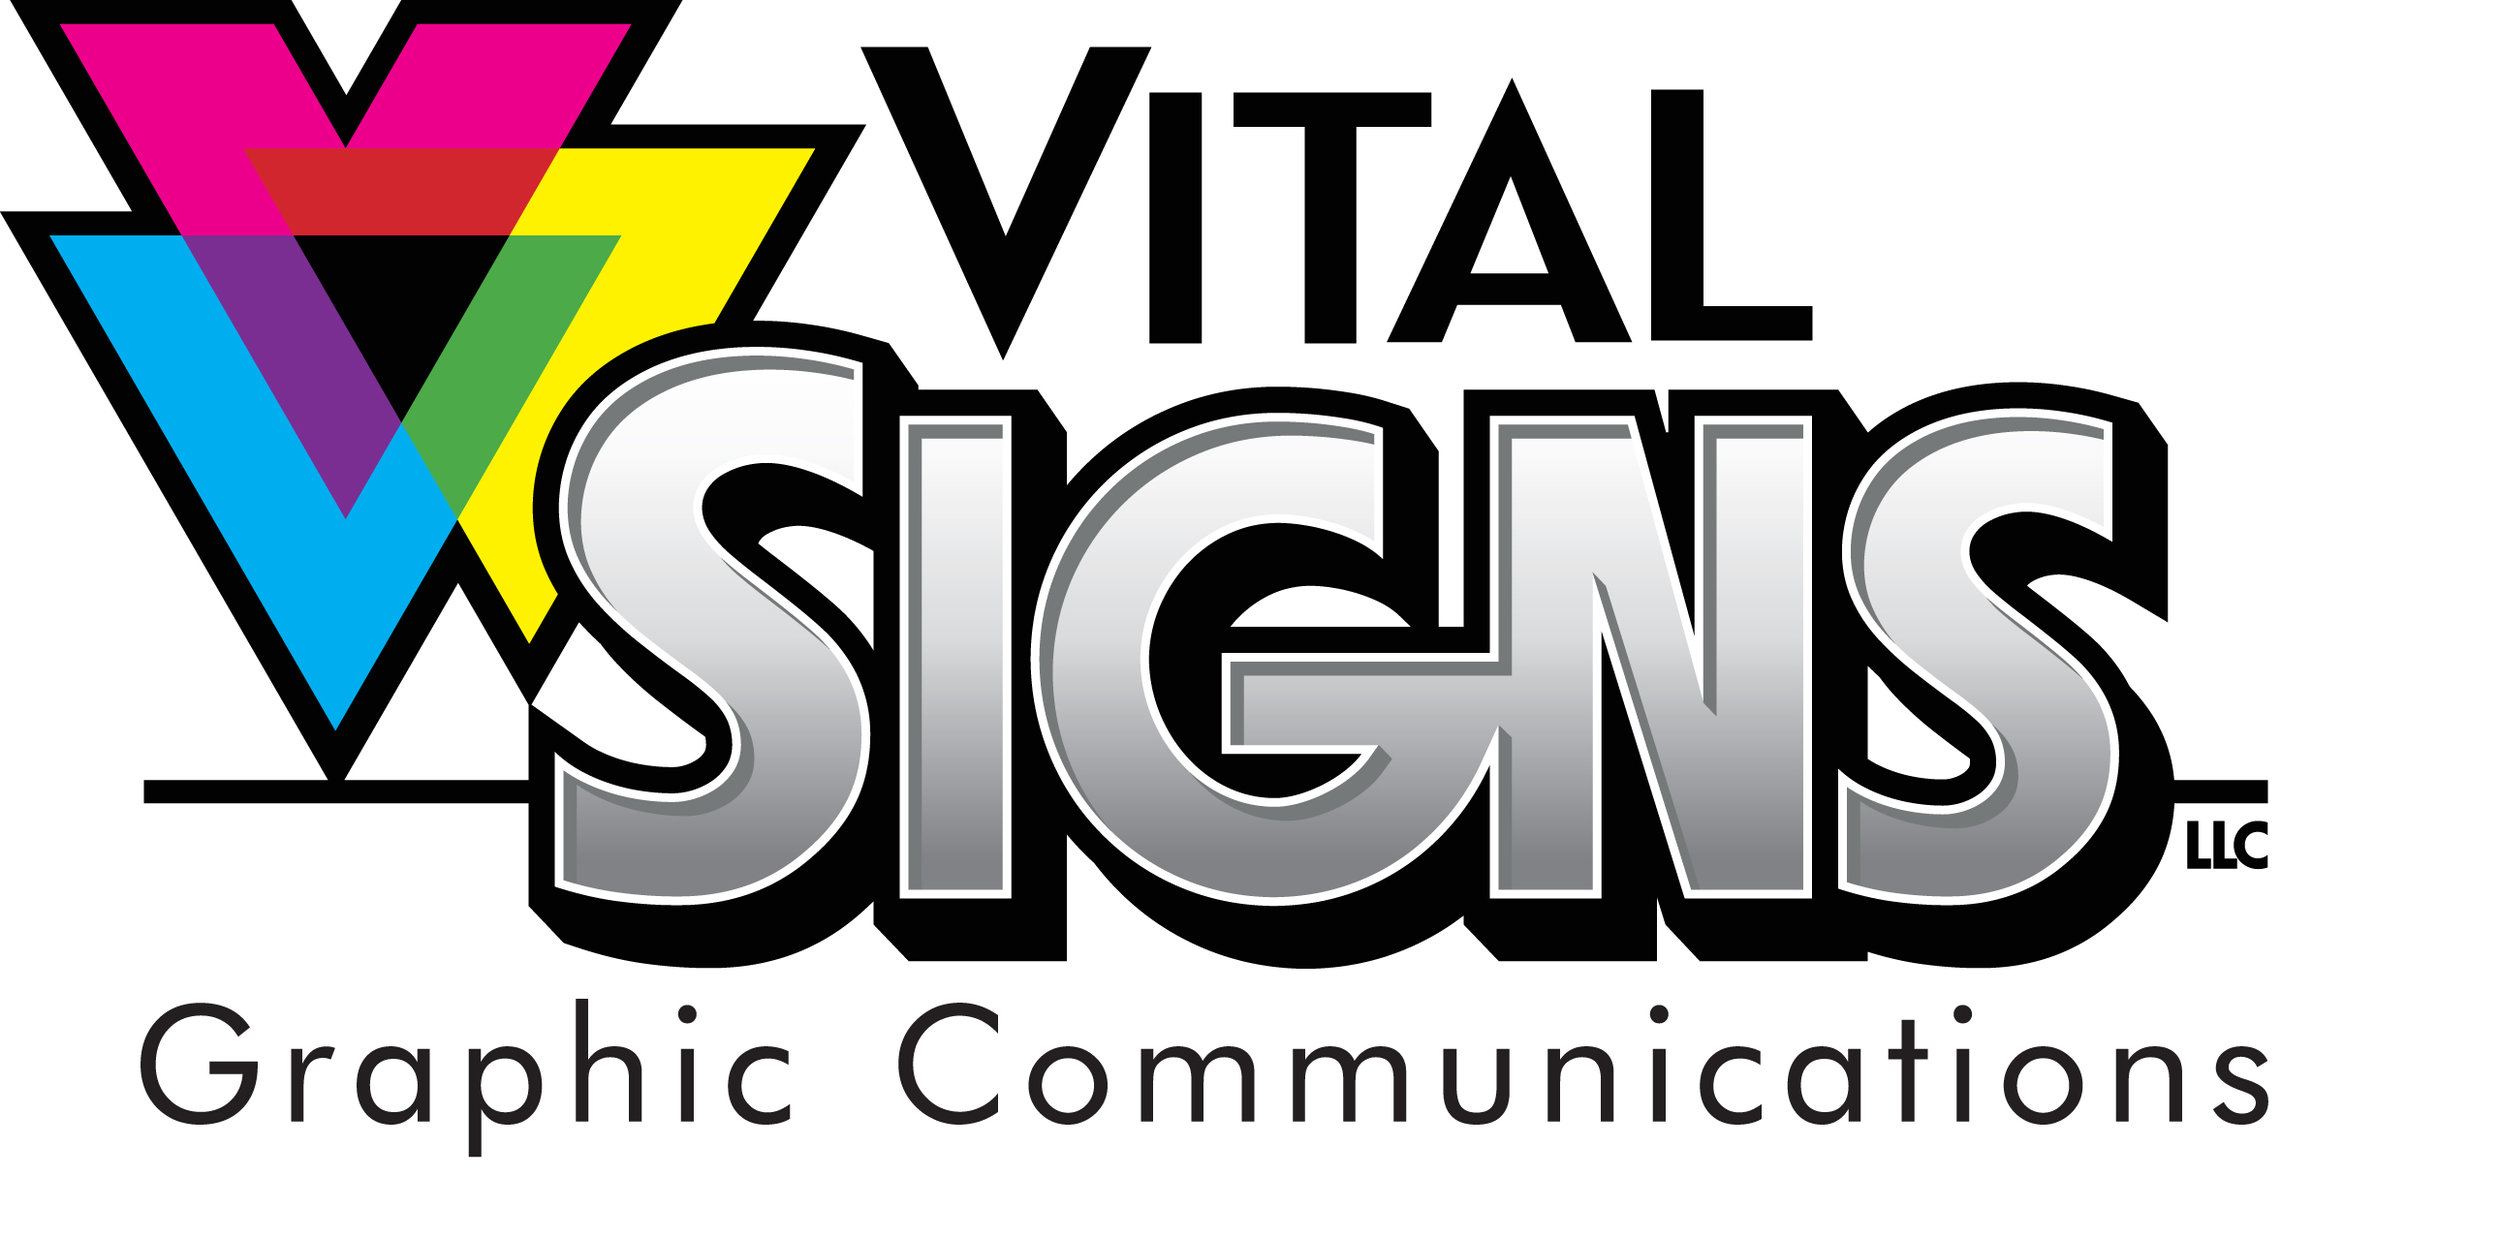 Vital signs logo color.jpg